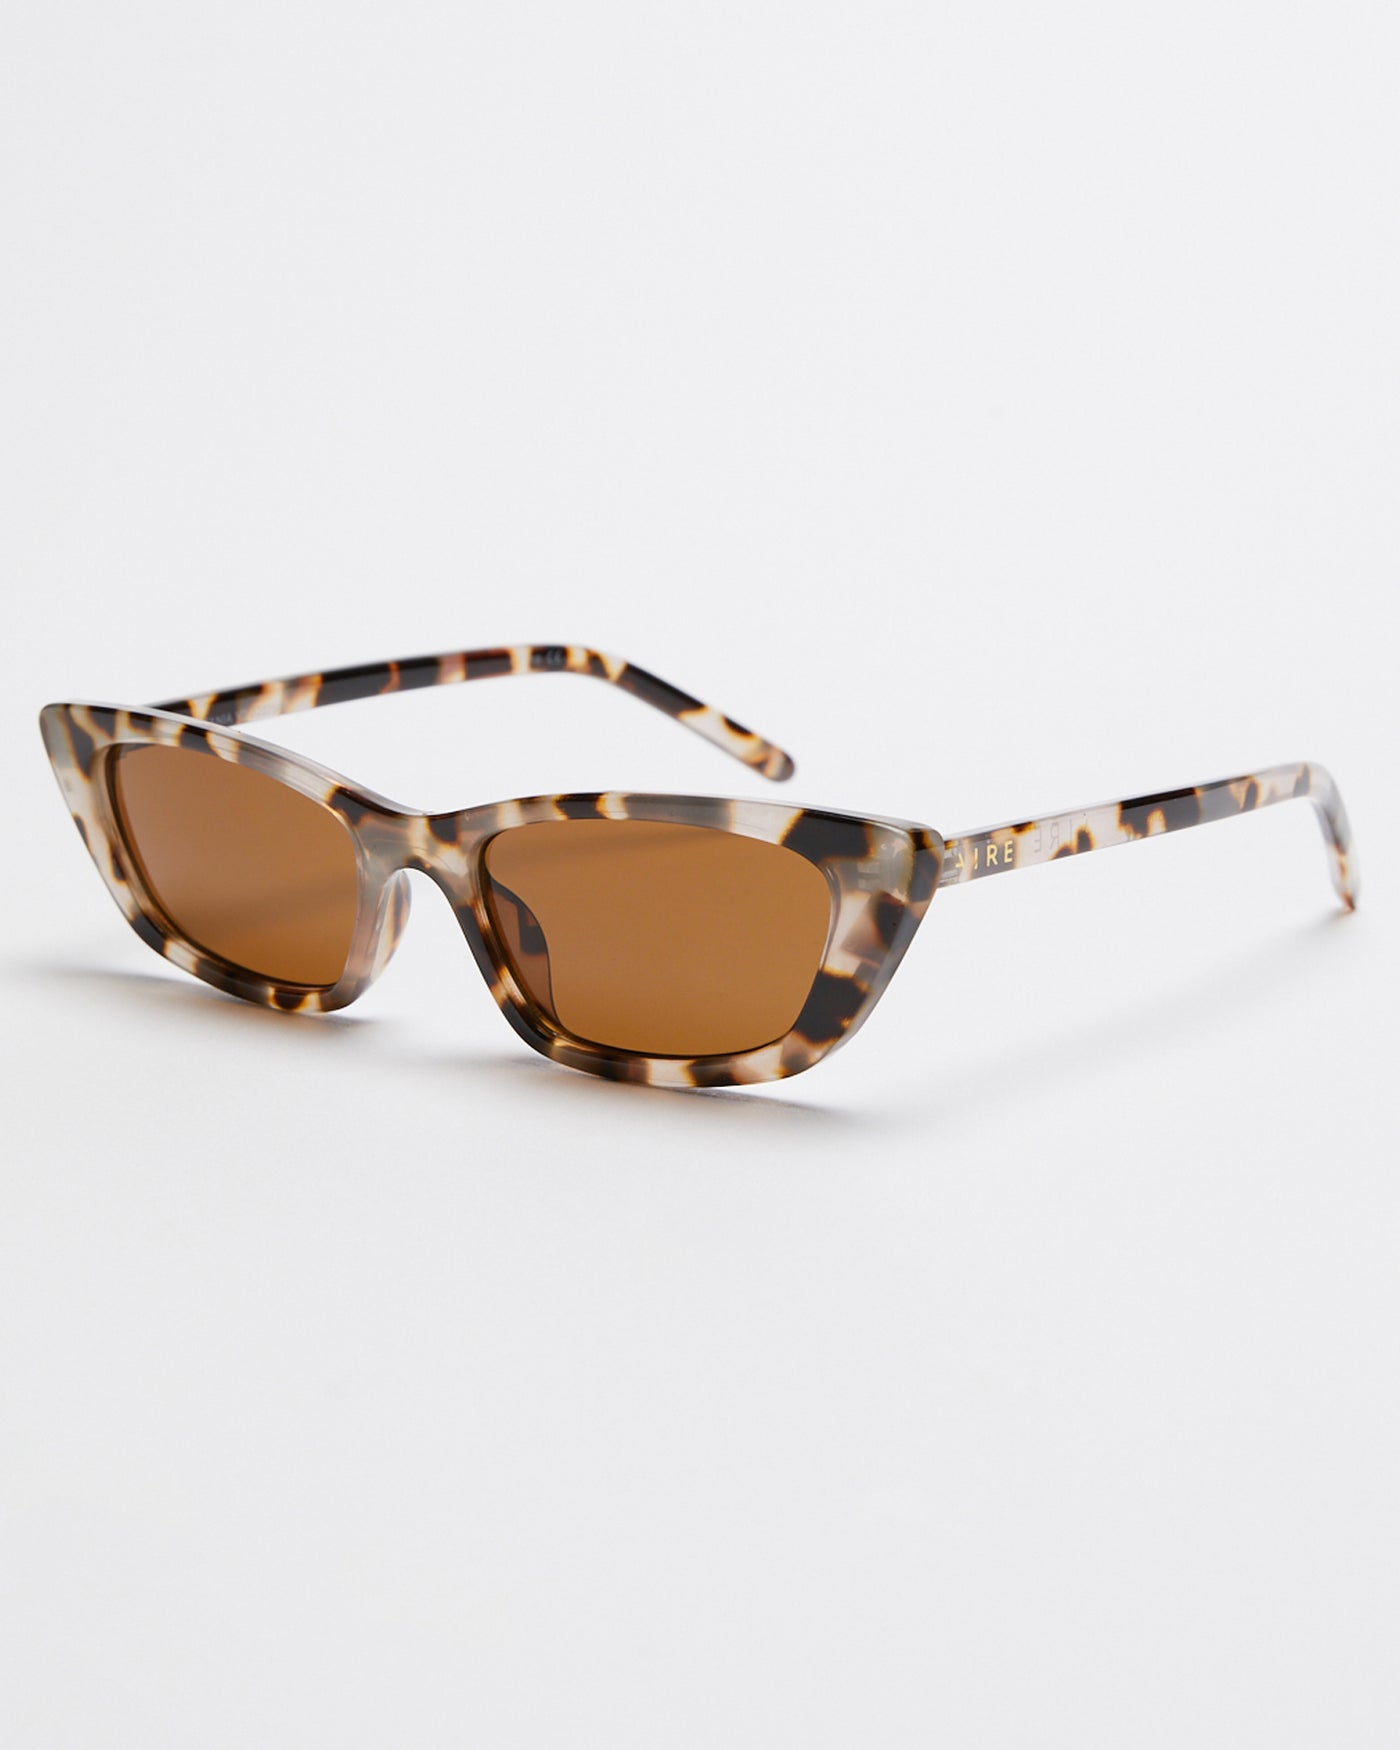 Pre-Loved, Sunglasses, Aire Titania Sunglasses, From Remi's Closet